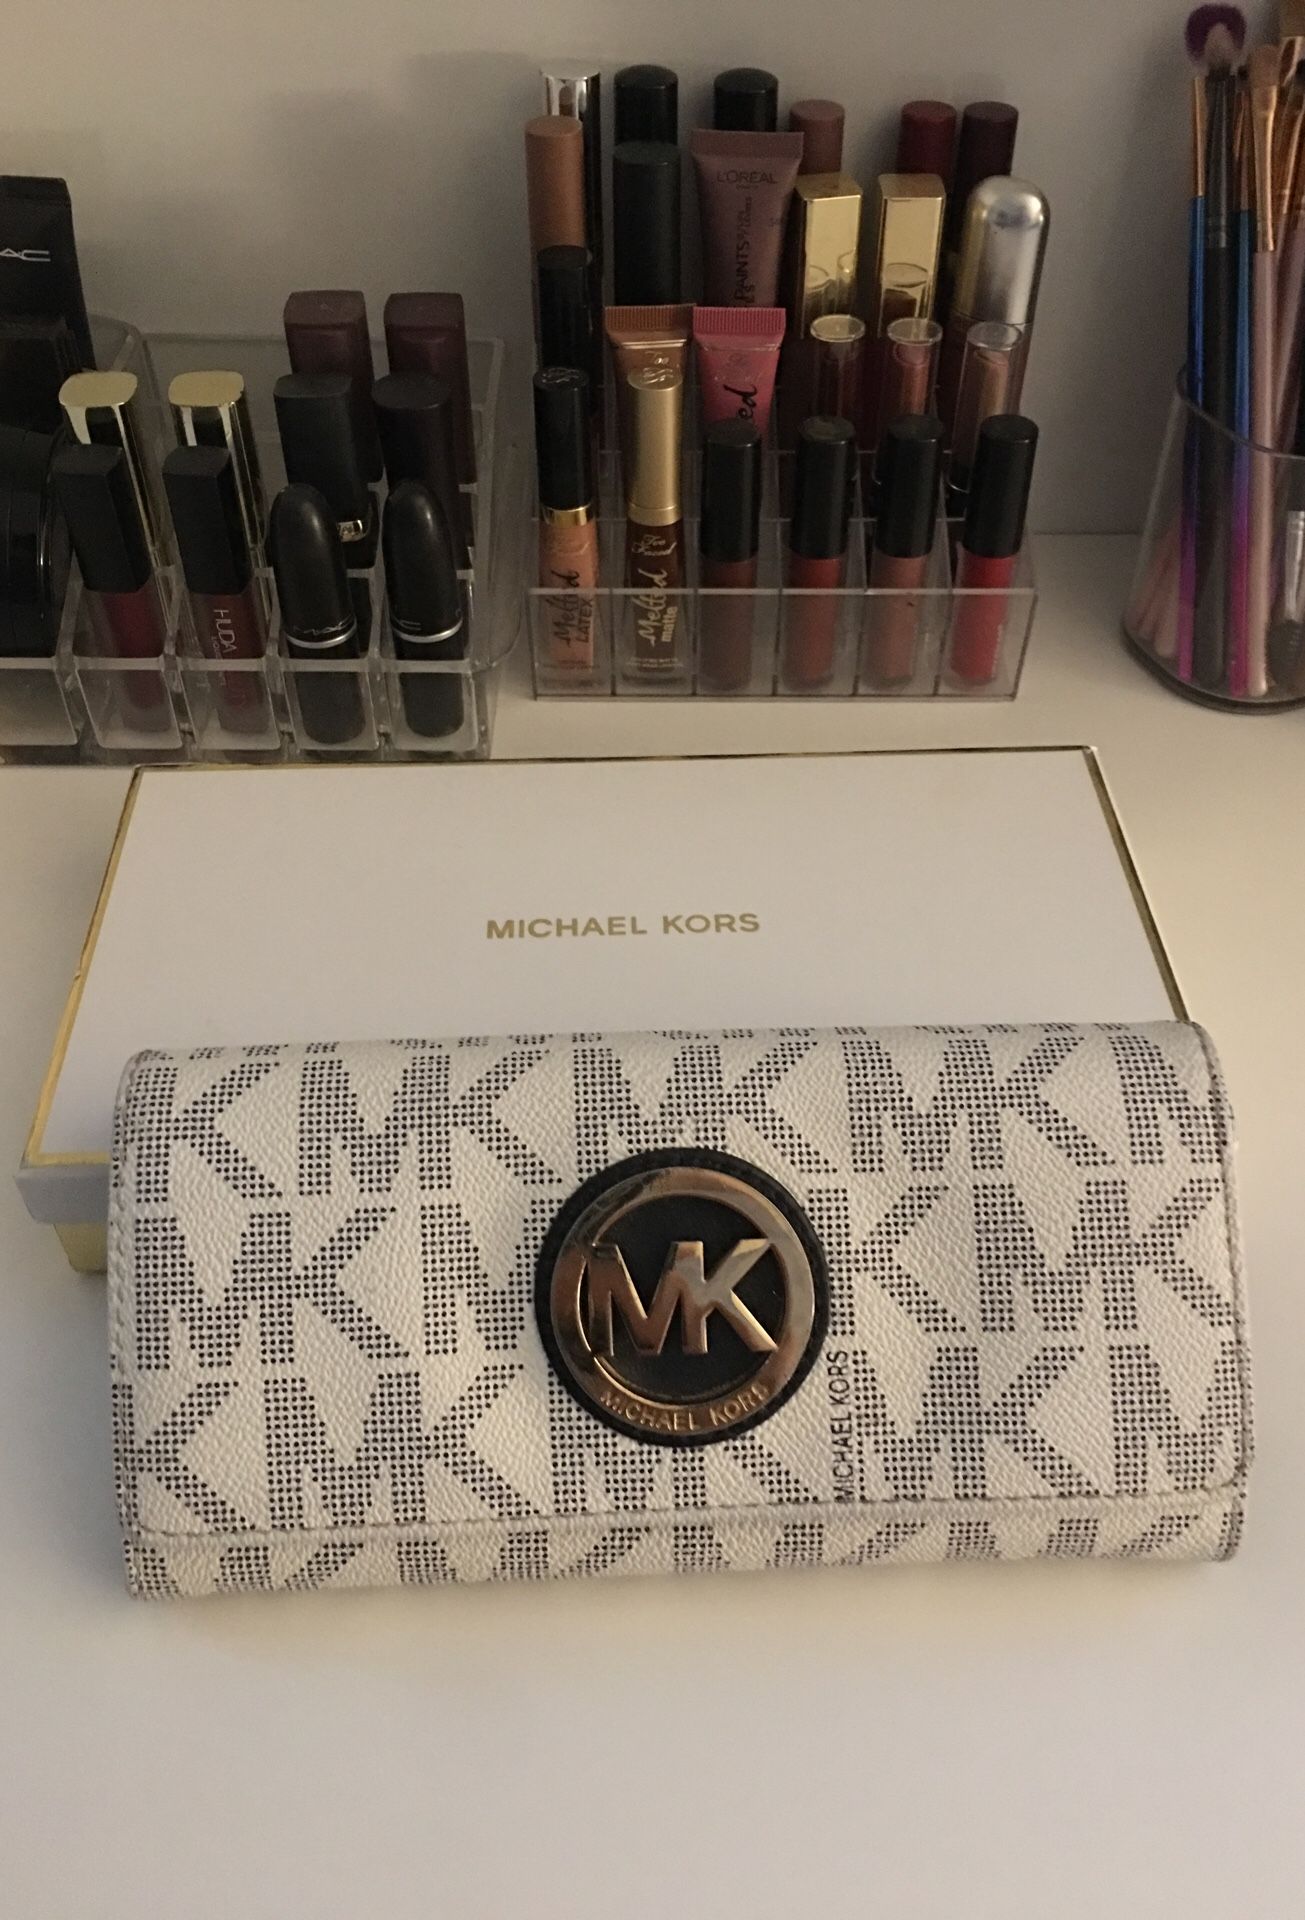 mk wallet